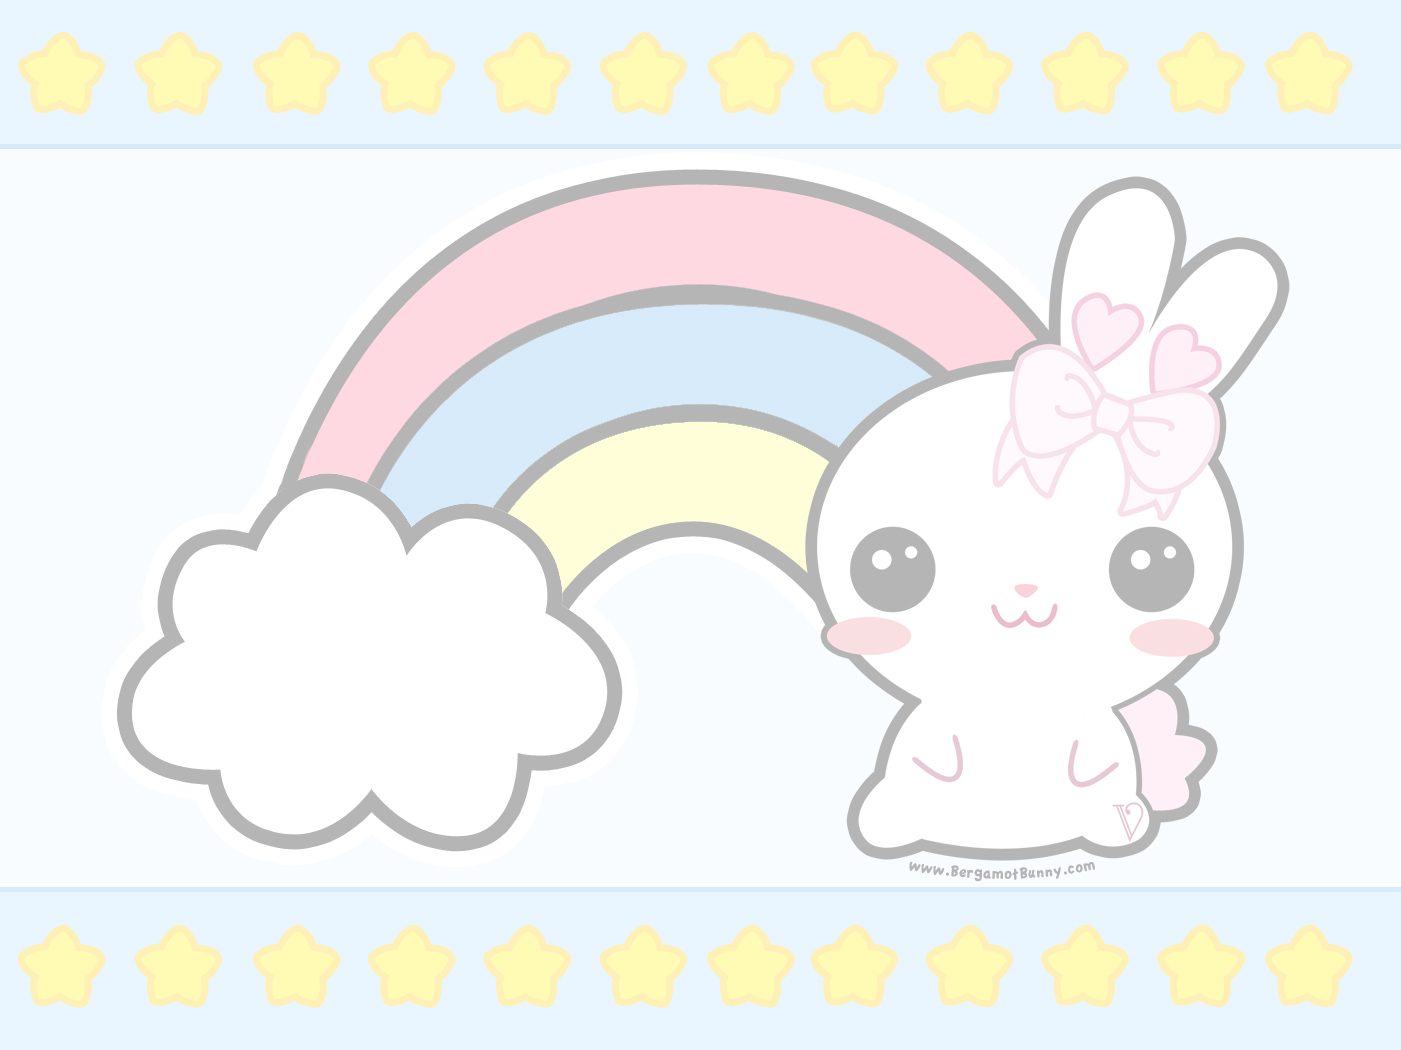 Heres a cute rainbow themed desktop wallpaper D   Bergamot